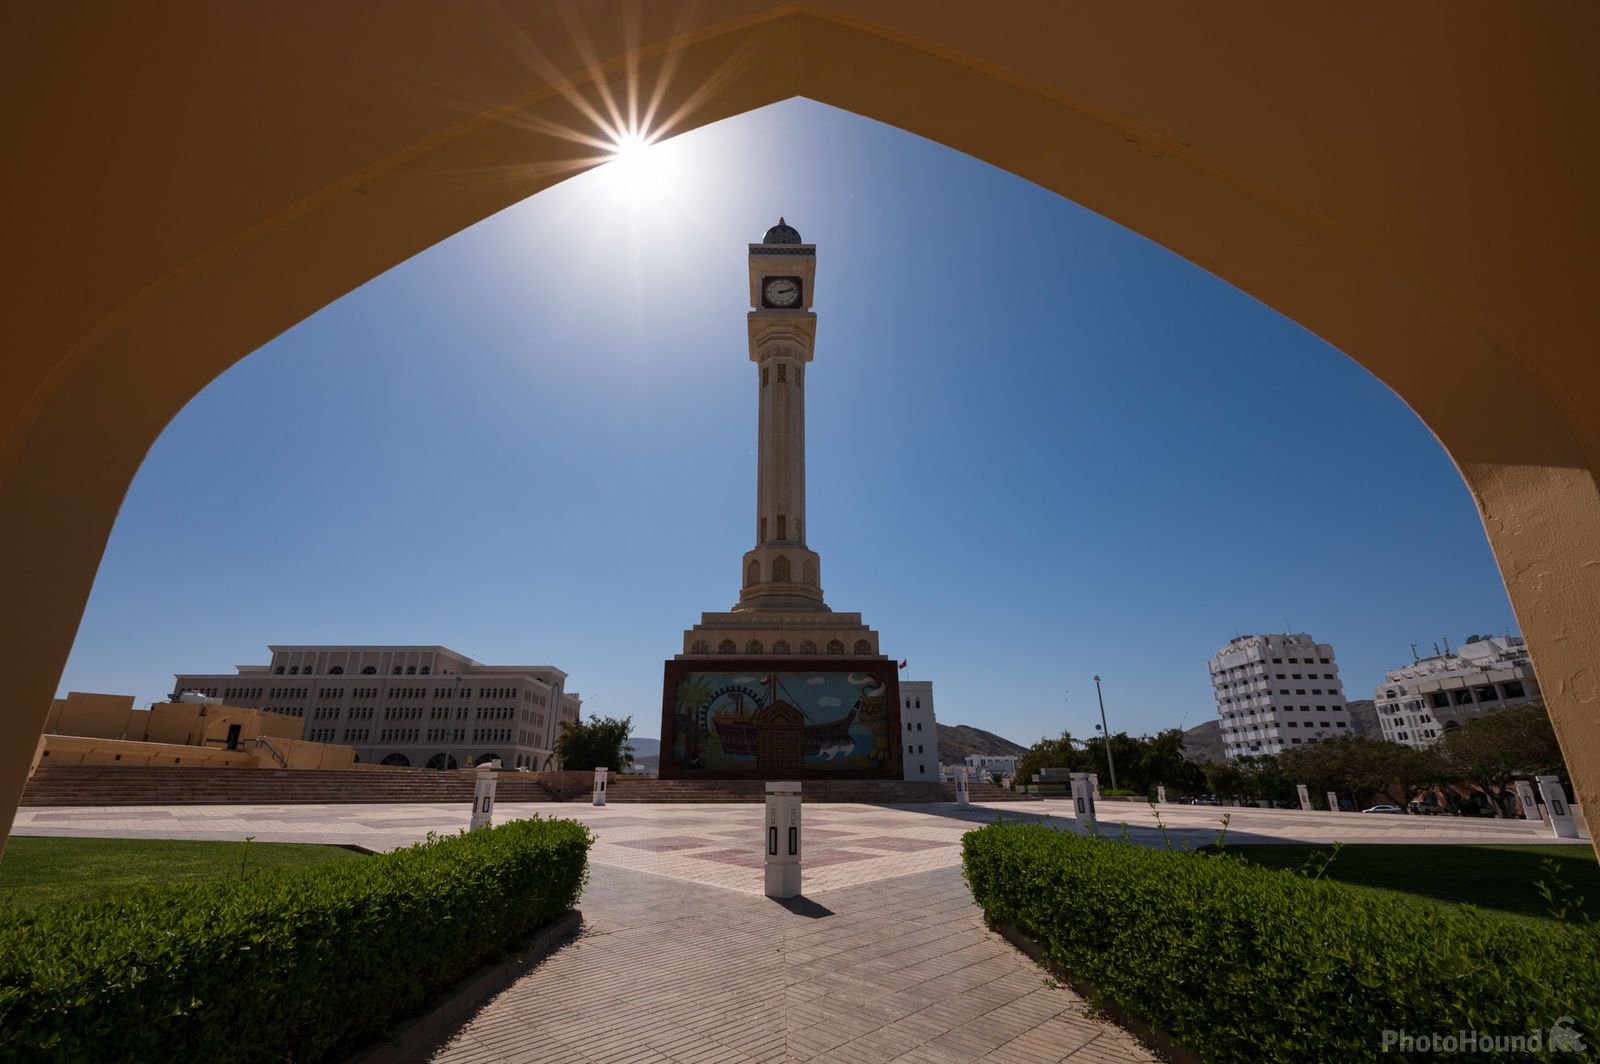 Image of Ruwi Clock Tower (برج الساعة روي) by Luka Esenko